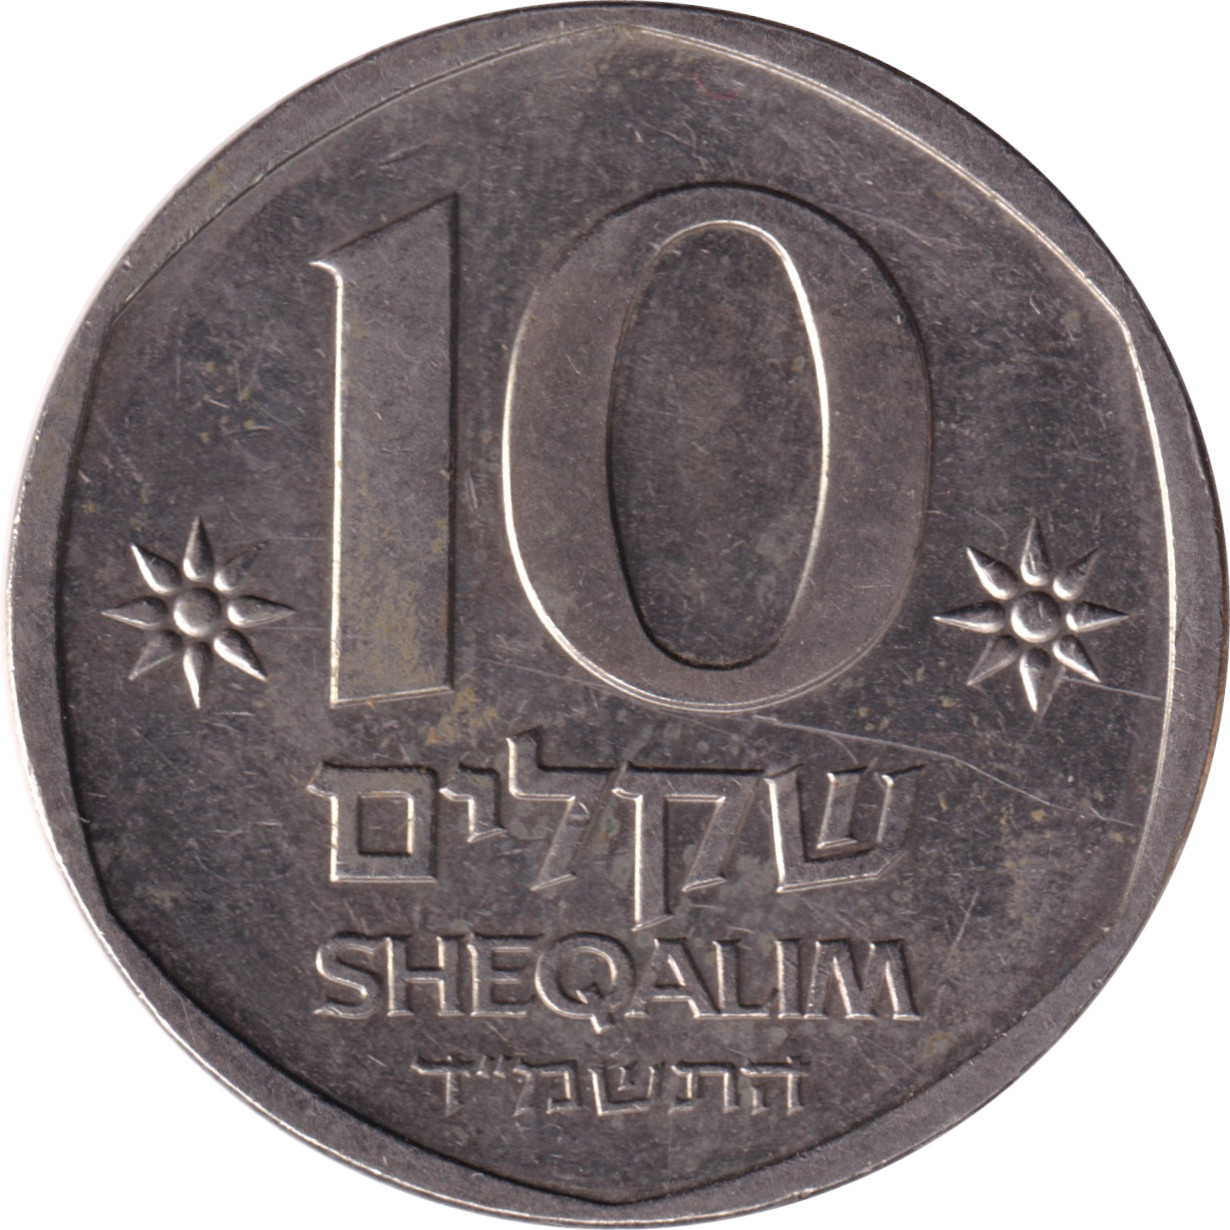 10 sheqalim - Théodore Herzl